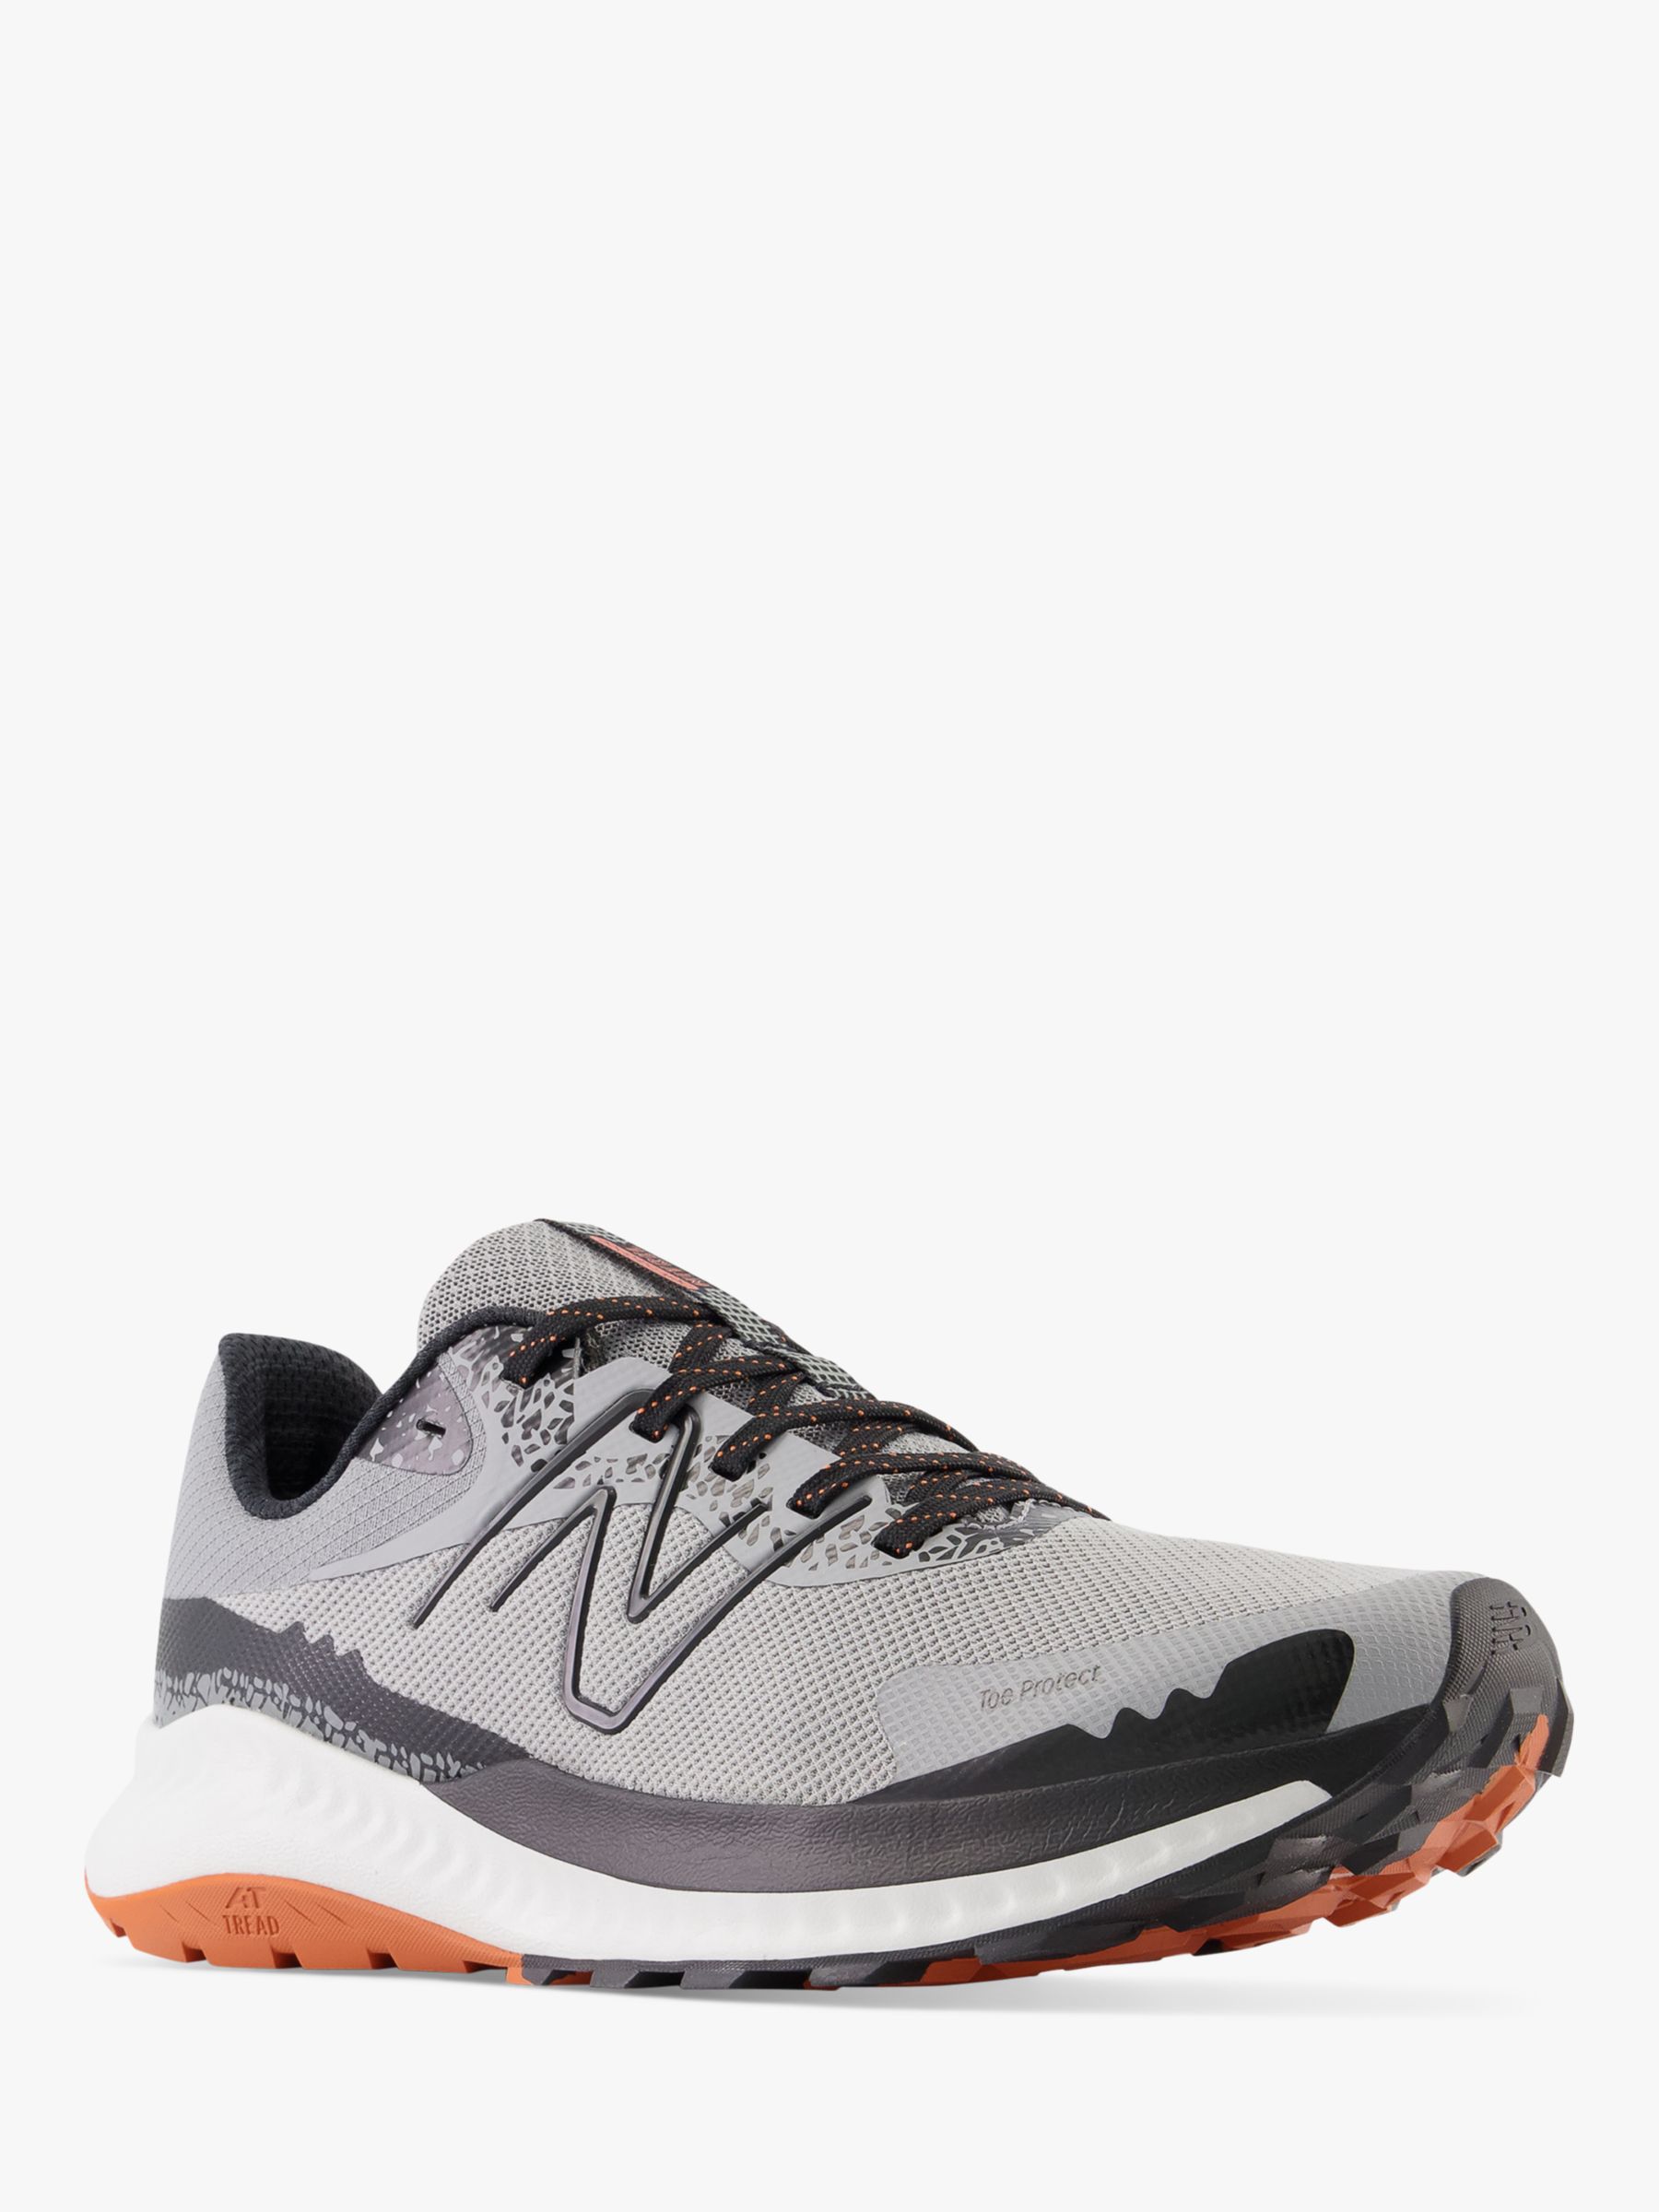 New Balance Dyna Soft Nitrel V5 Men's Trail Running Trainers, Shadow Grey, 11